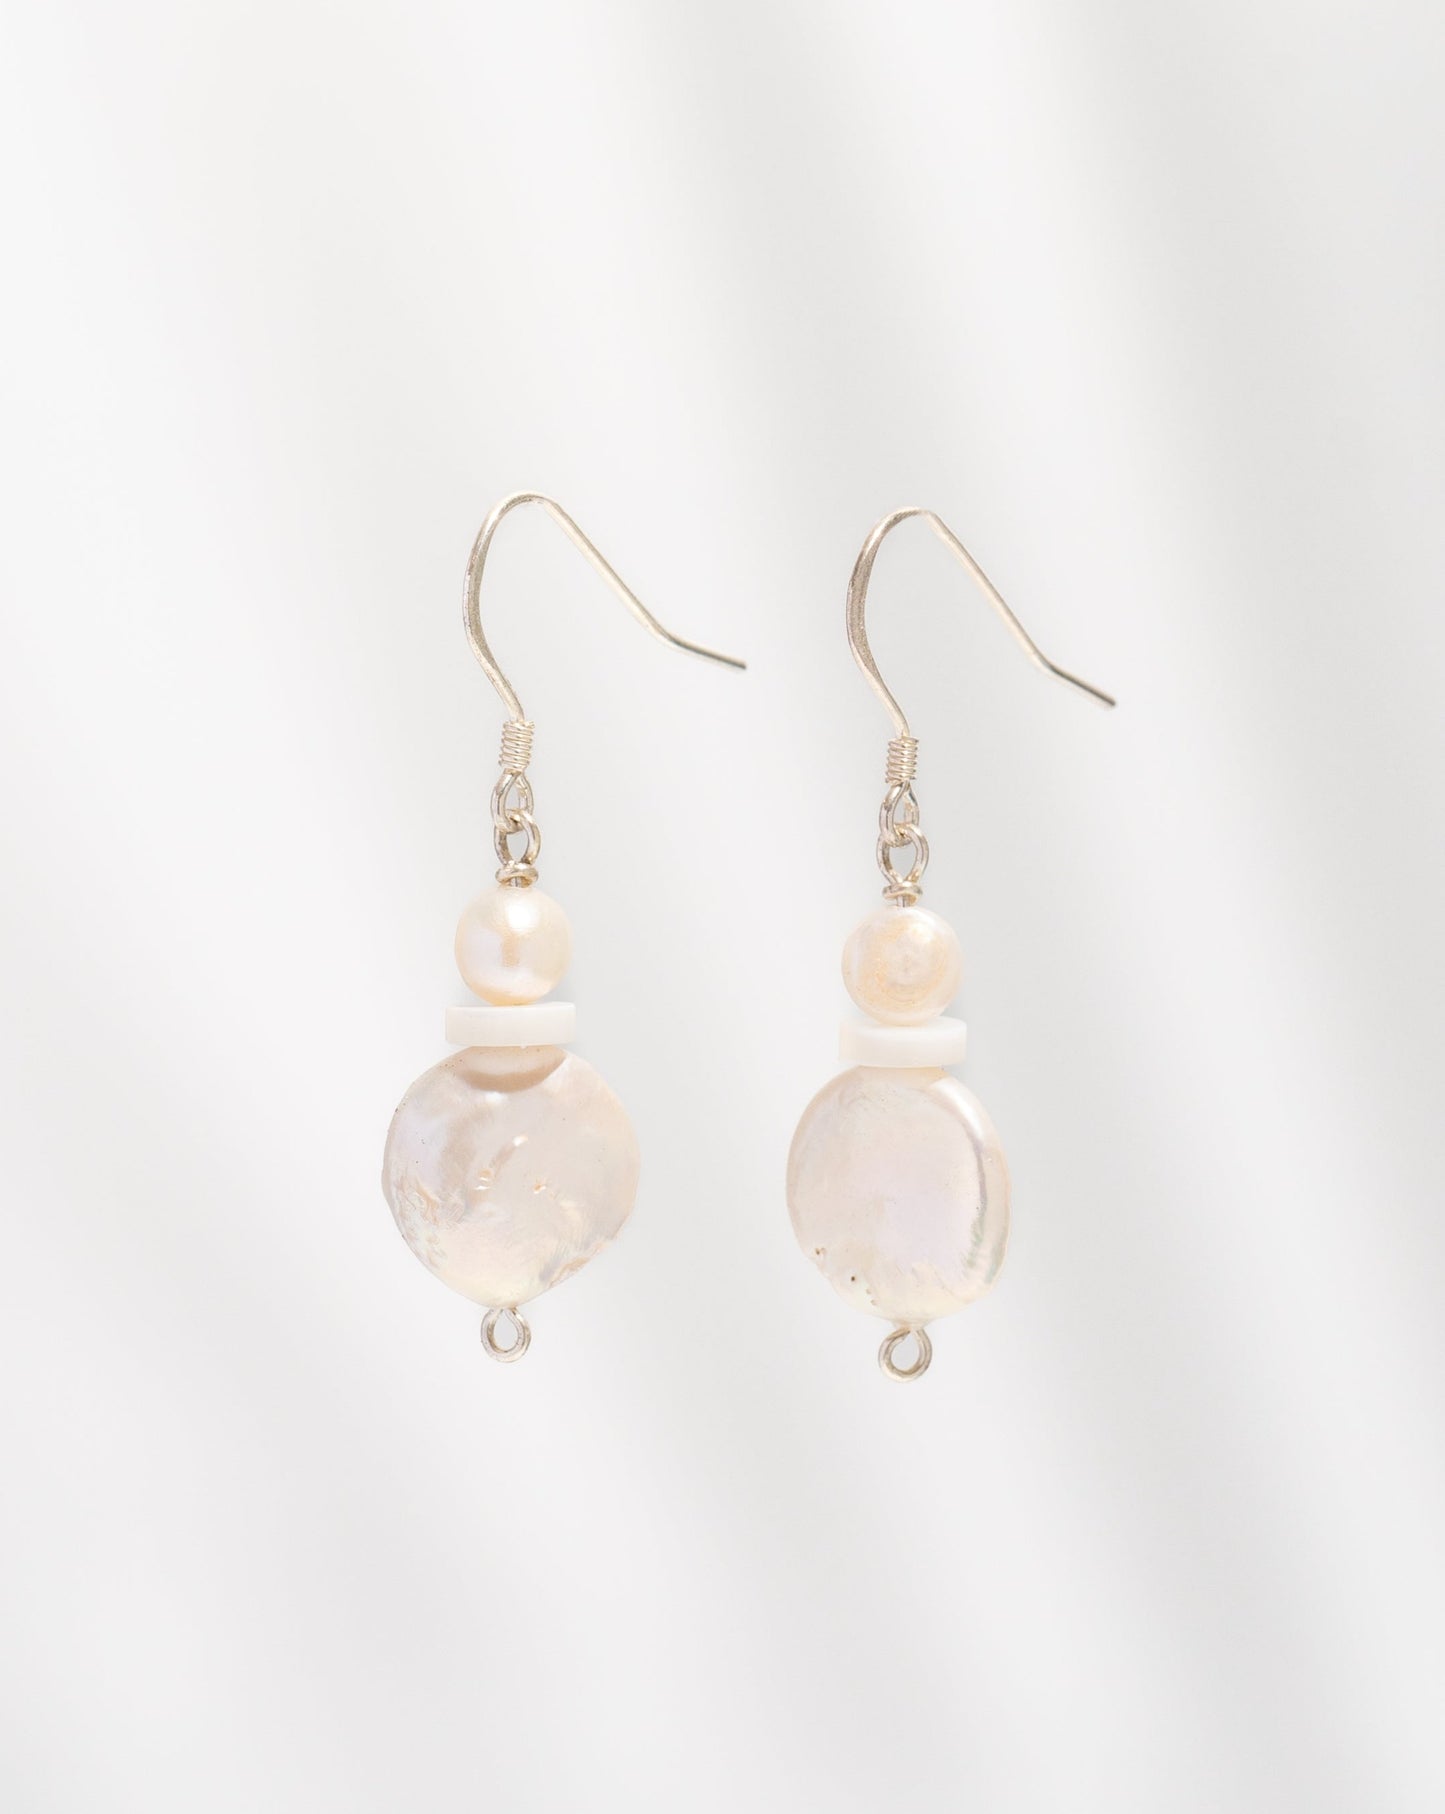 Duo Pearl Earrings- Freshwater Pearl Earrings in Sterling Silver